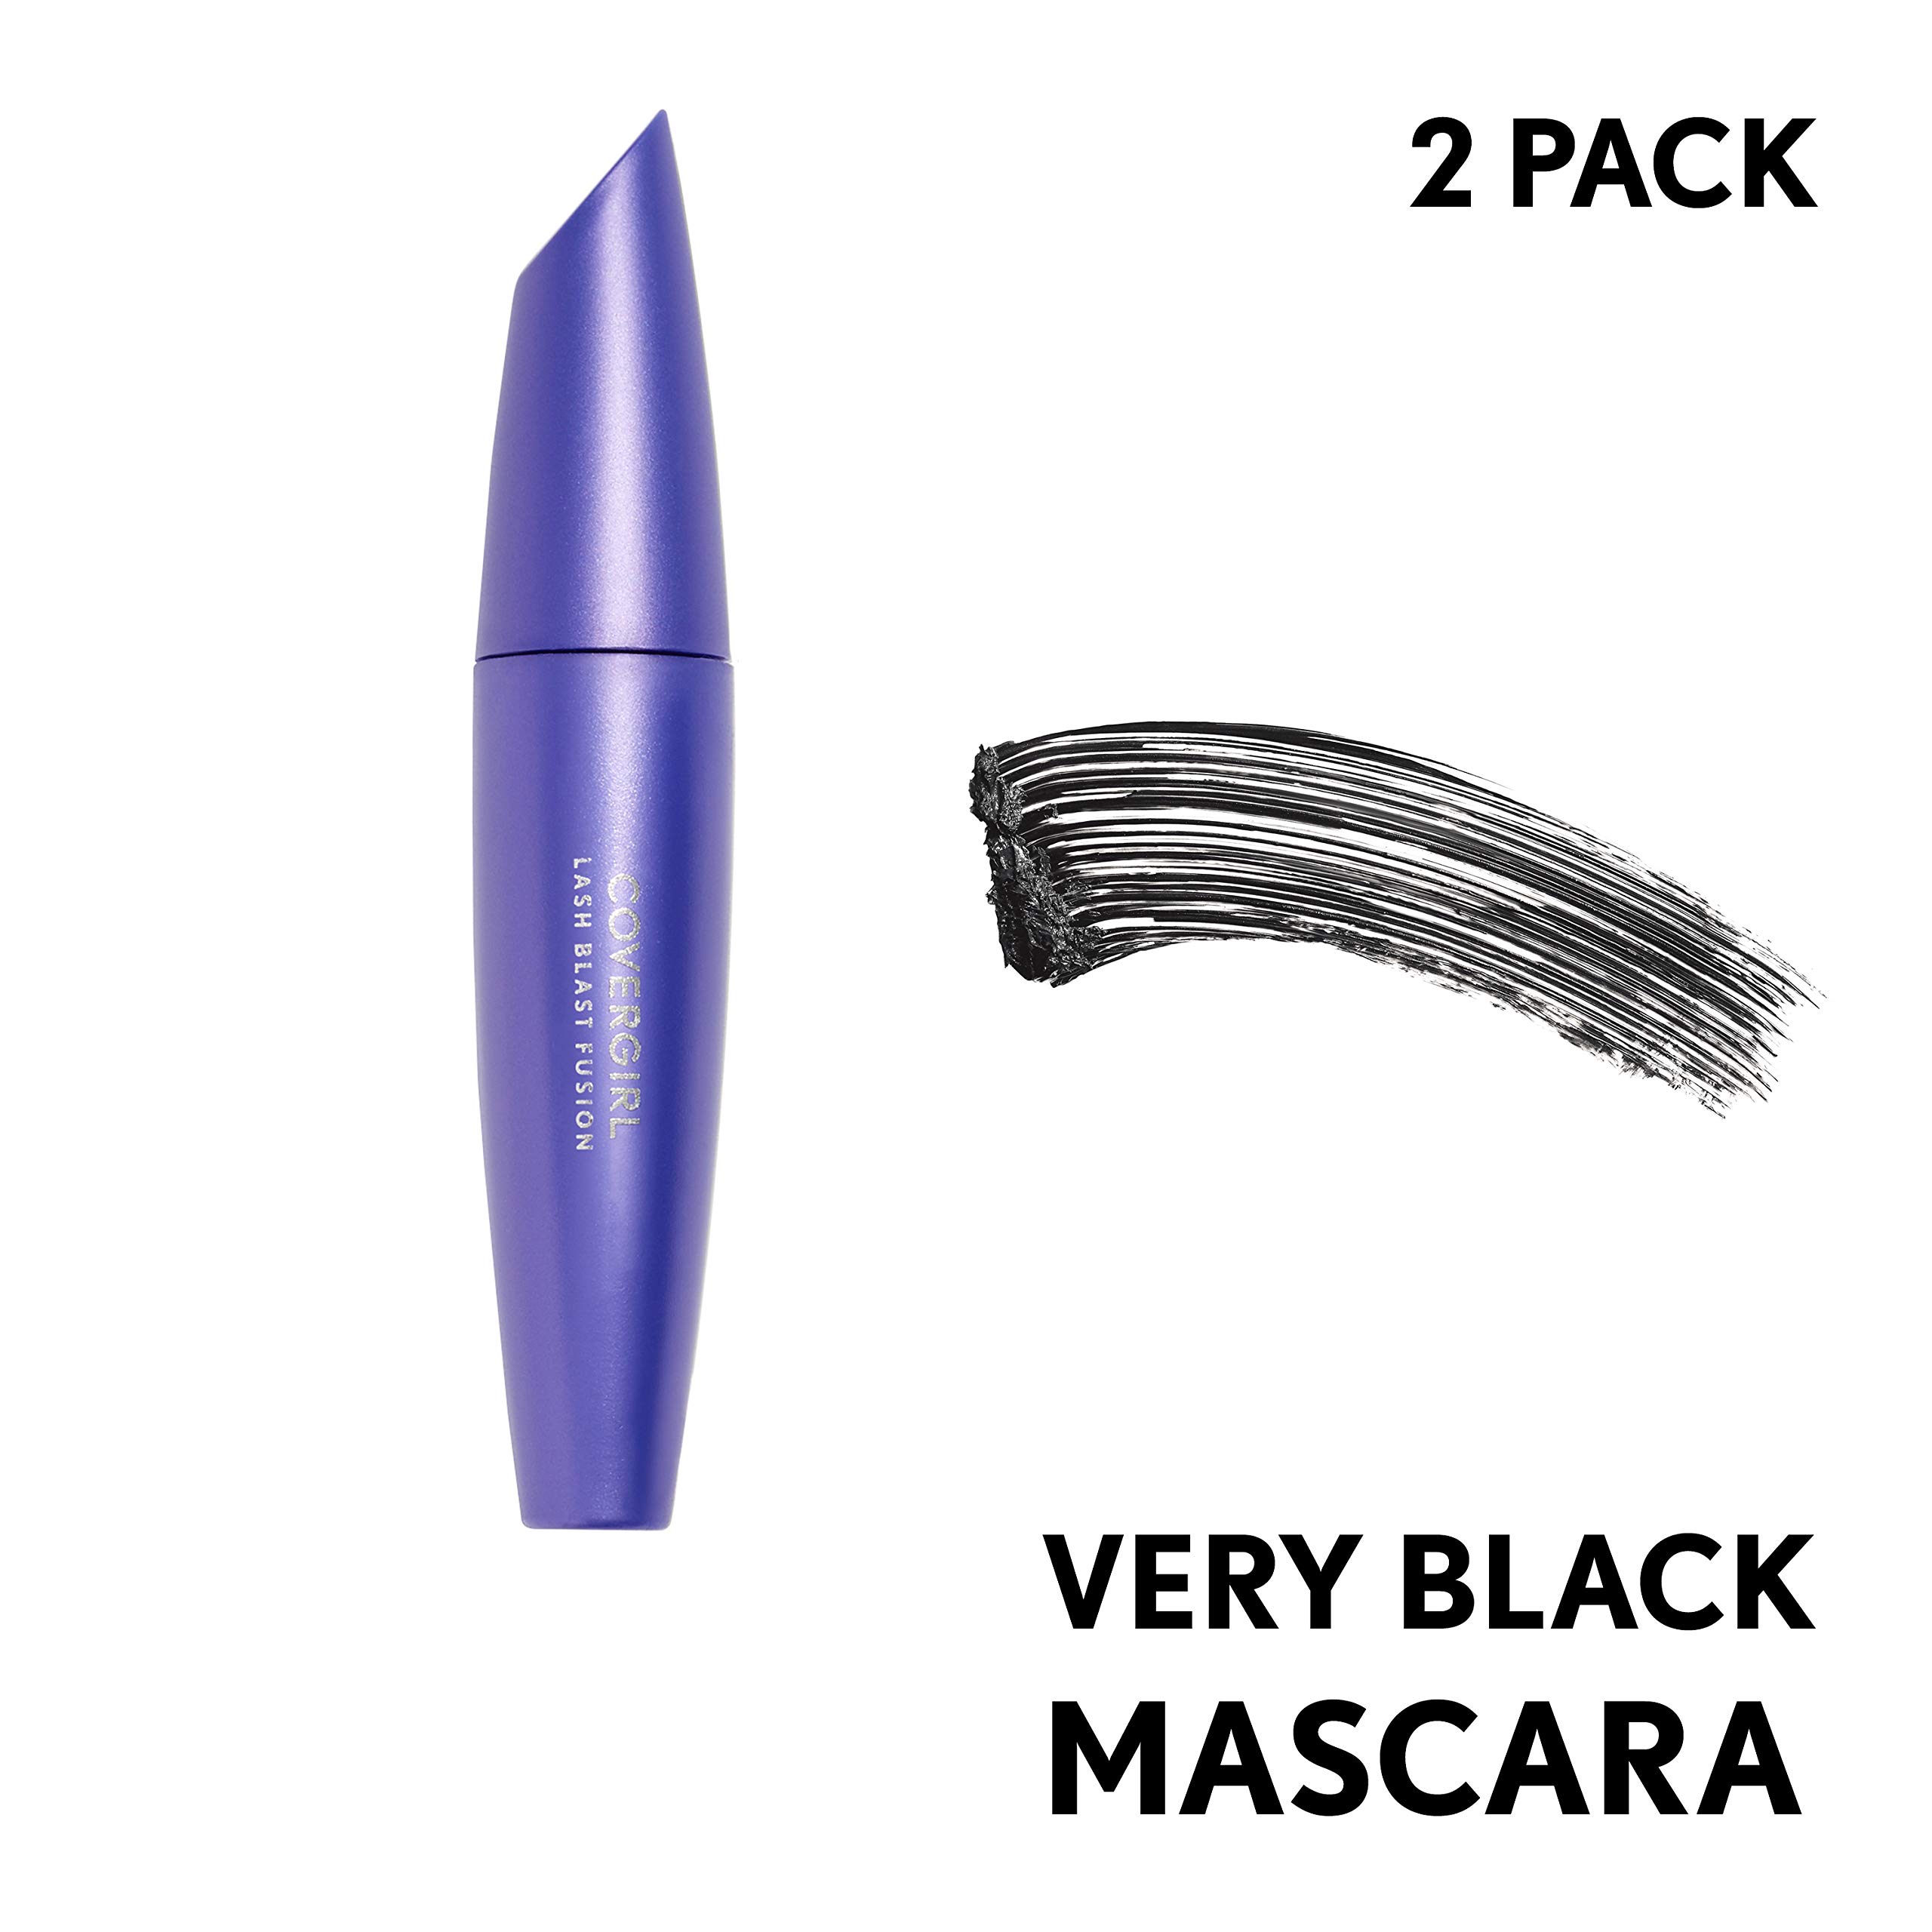 COVERGIRL Lashblast Fusion Mascara, Very Black, 2 Count